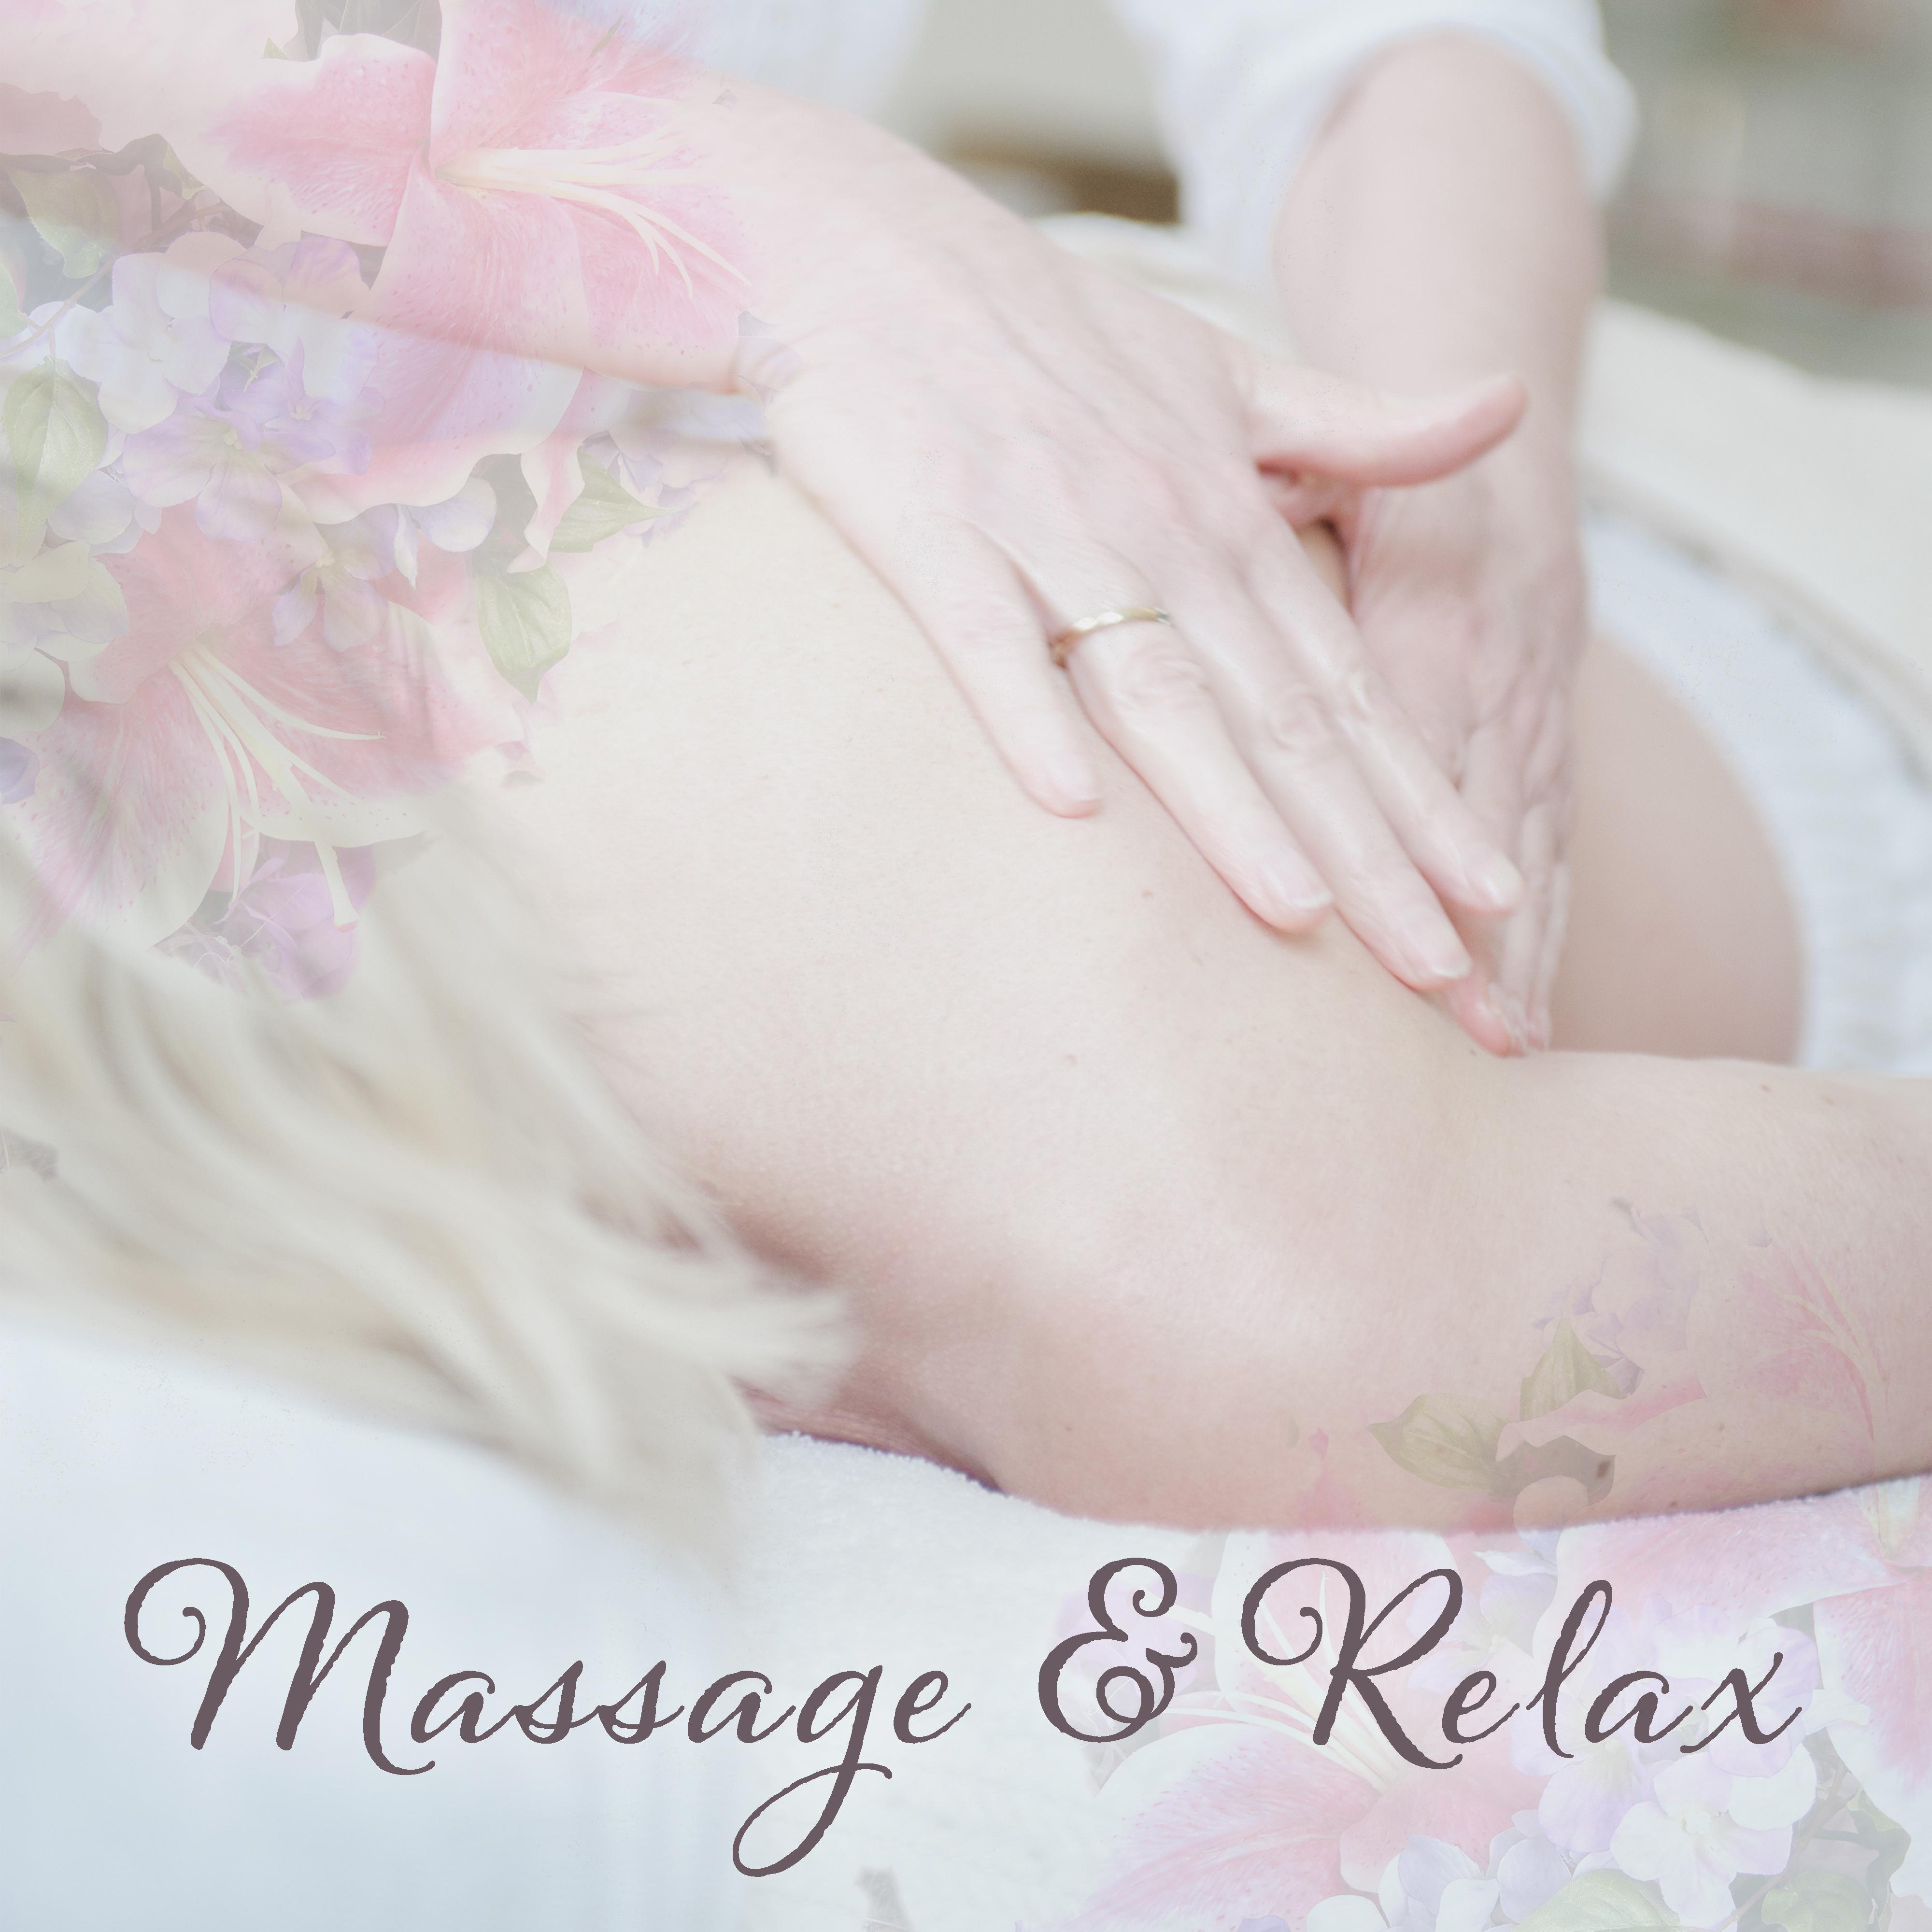 Massage  Relax  Soothing Wellness, Asian Zen, Spa Music, Inner Bliss, Healing Music to Rest